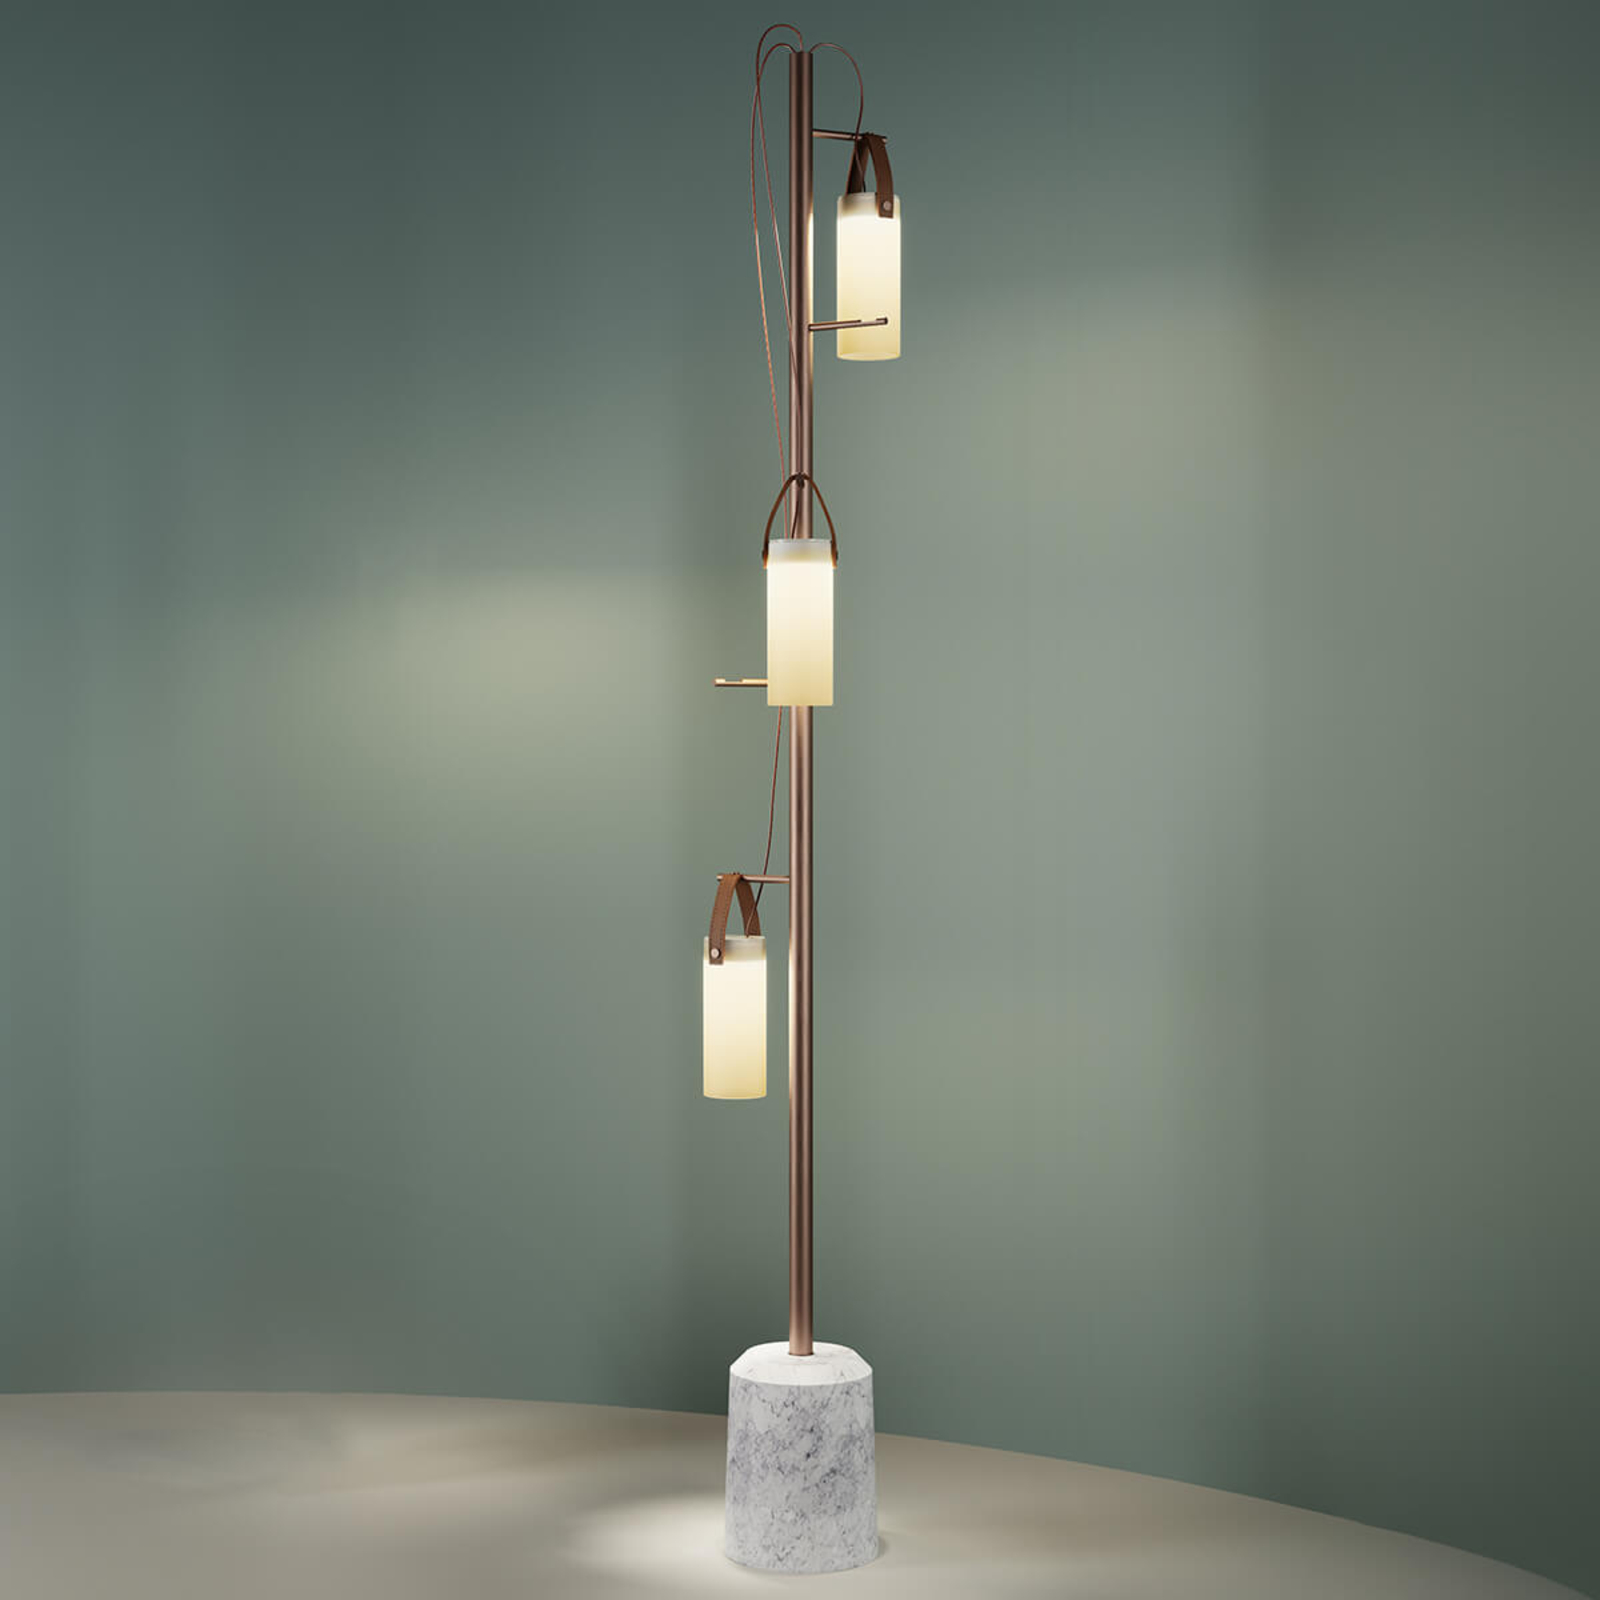 grind woede Theoretisch LED design vloerlamp Galerie met 3 lampen | Lampen24.be